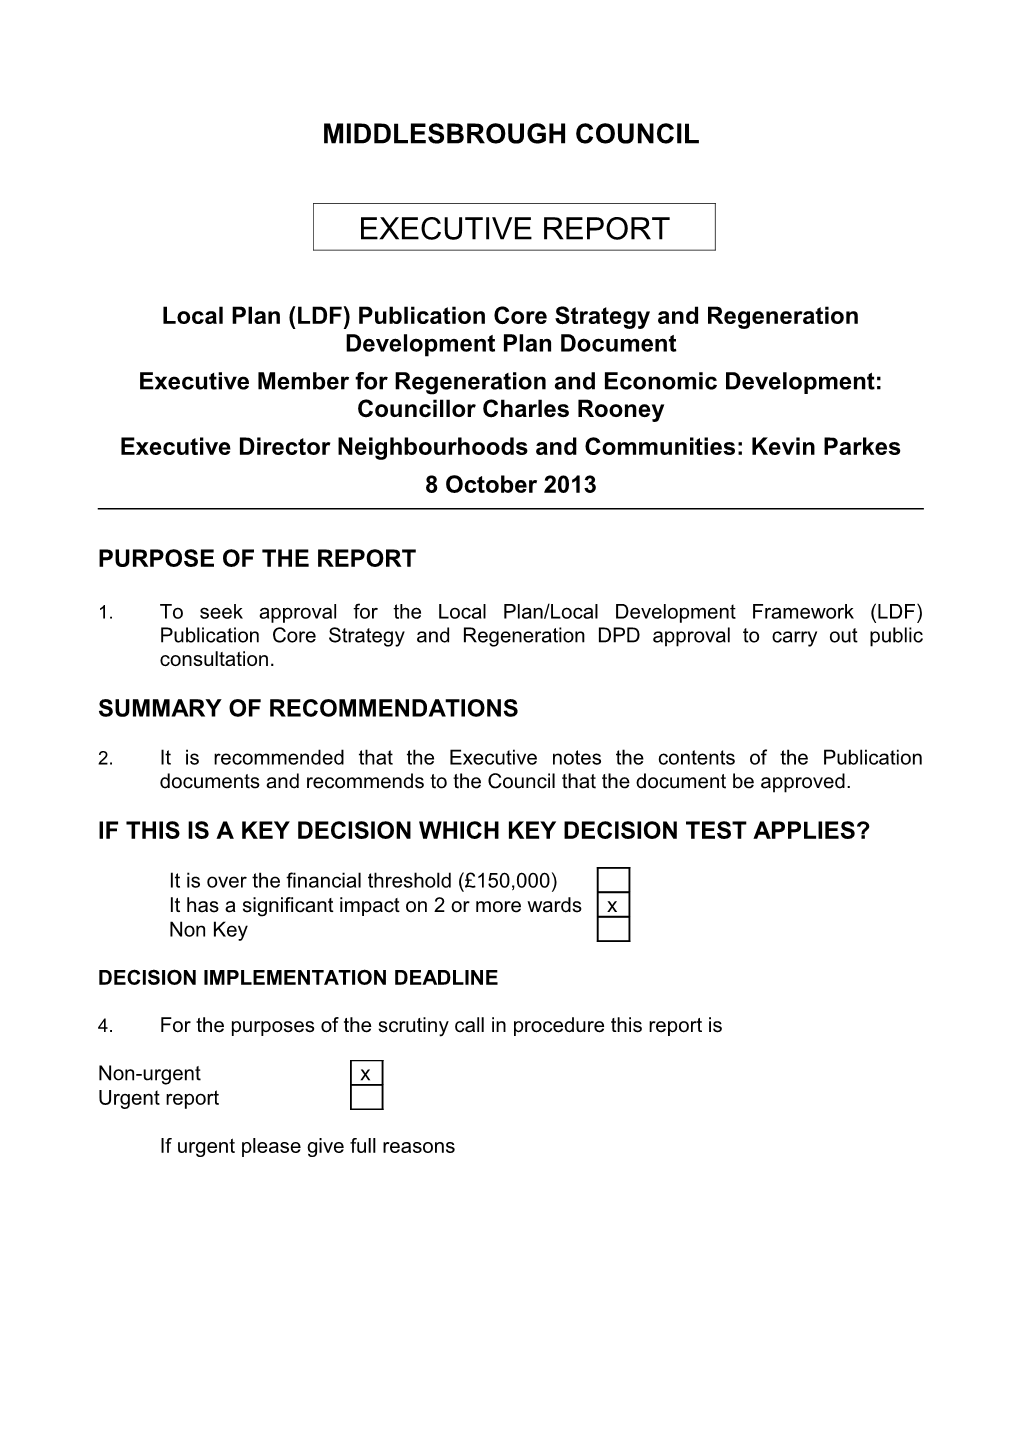 Local Plan (LDF) Publication Core Strategy and Regeneration Development Plan Document